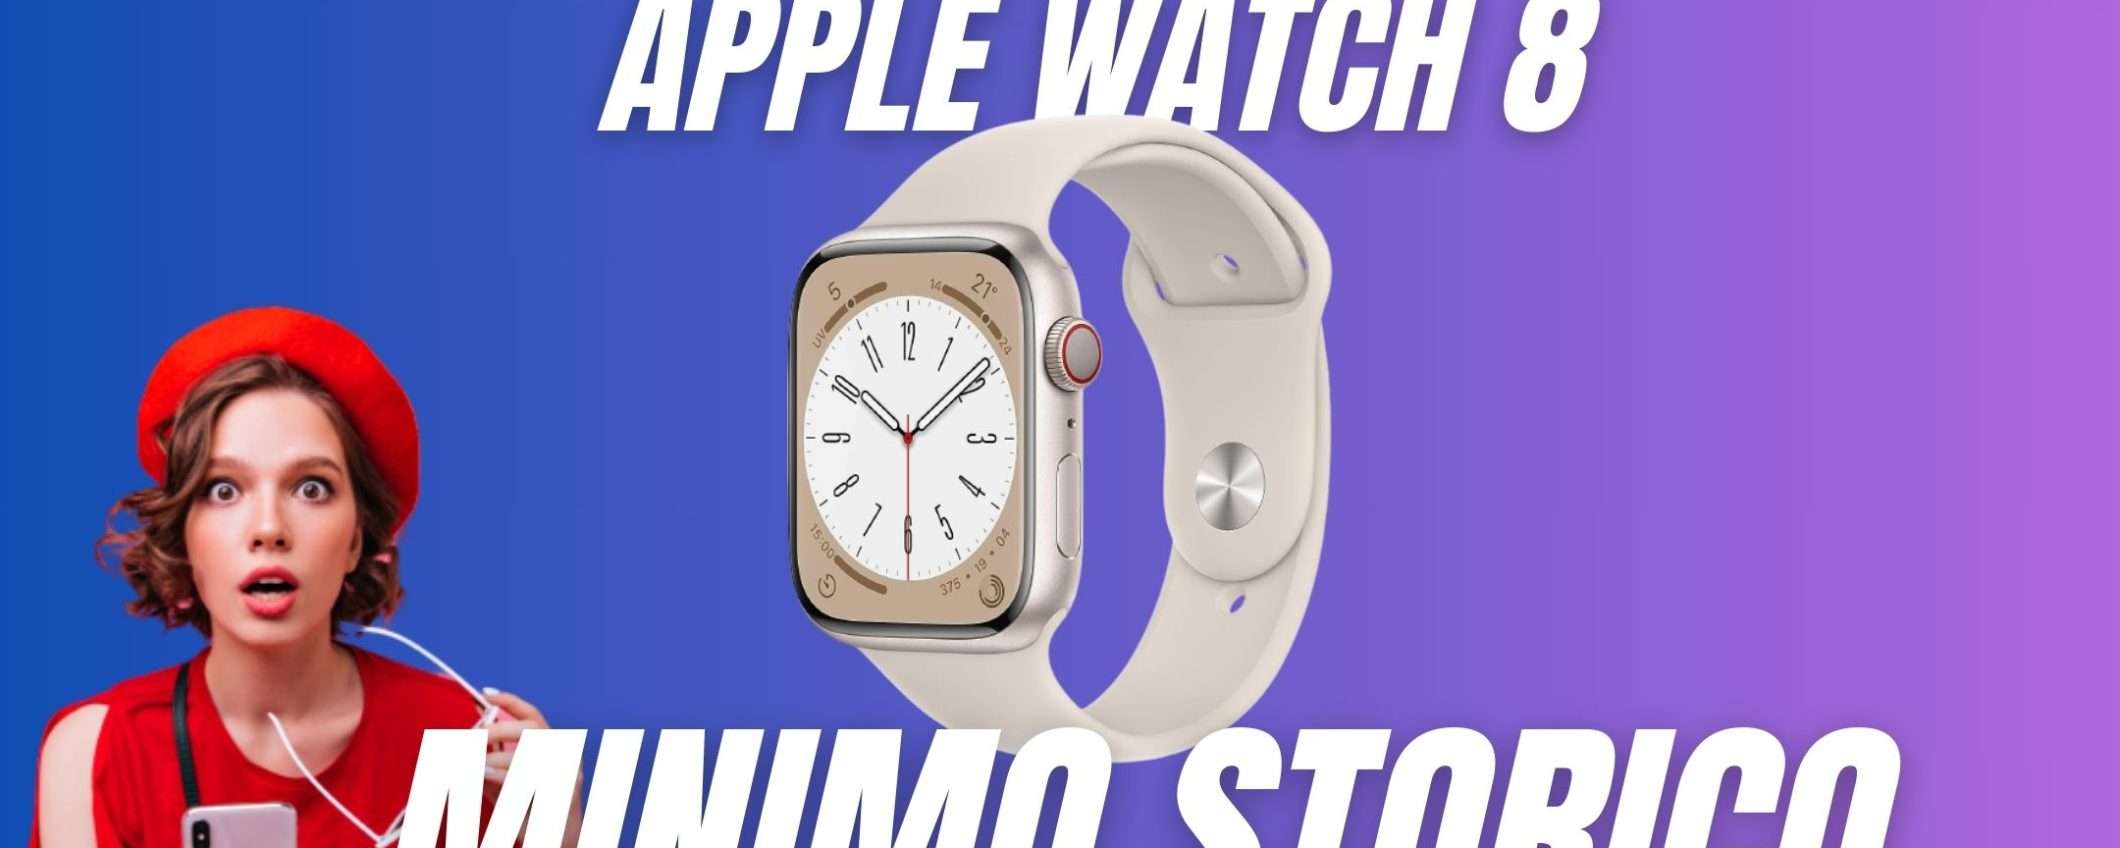 MINIMO STORICO per Apple Watch Series 8 su Amazon!